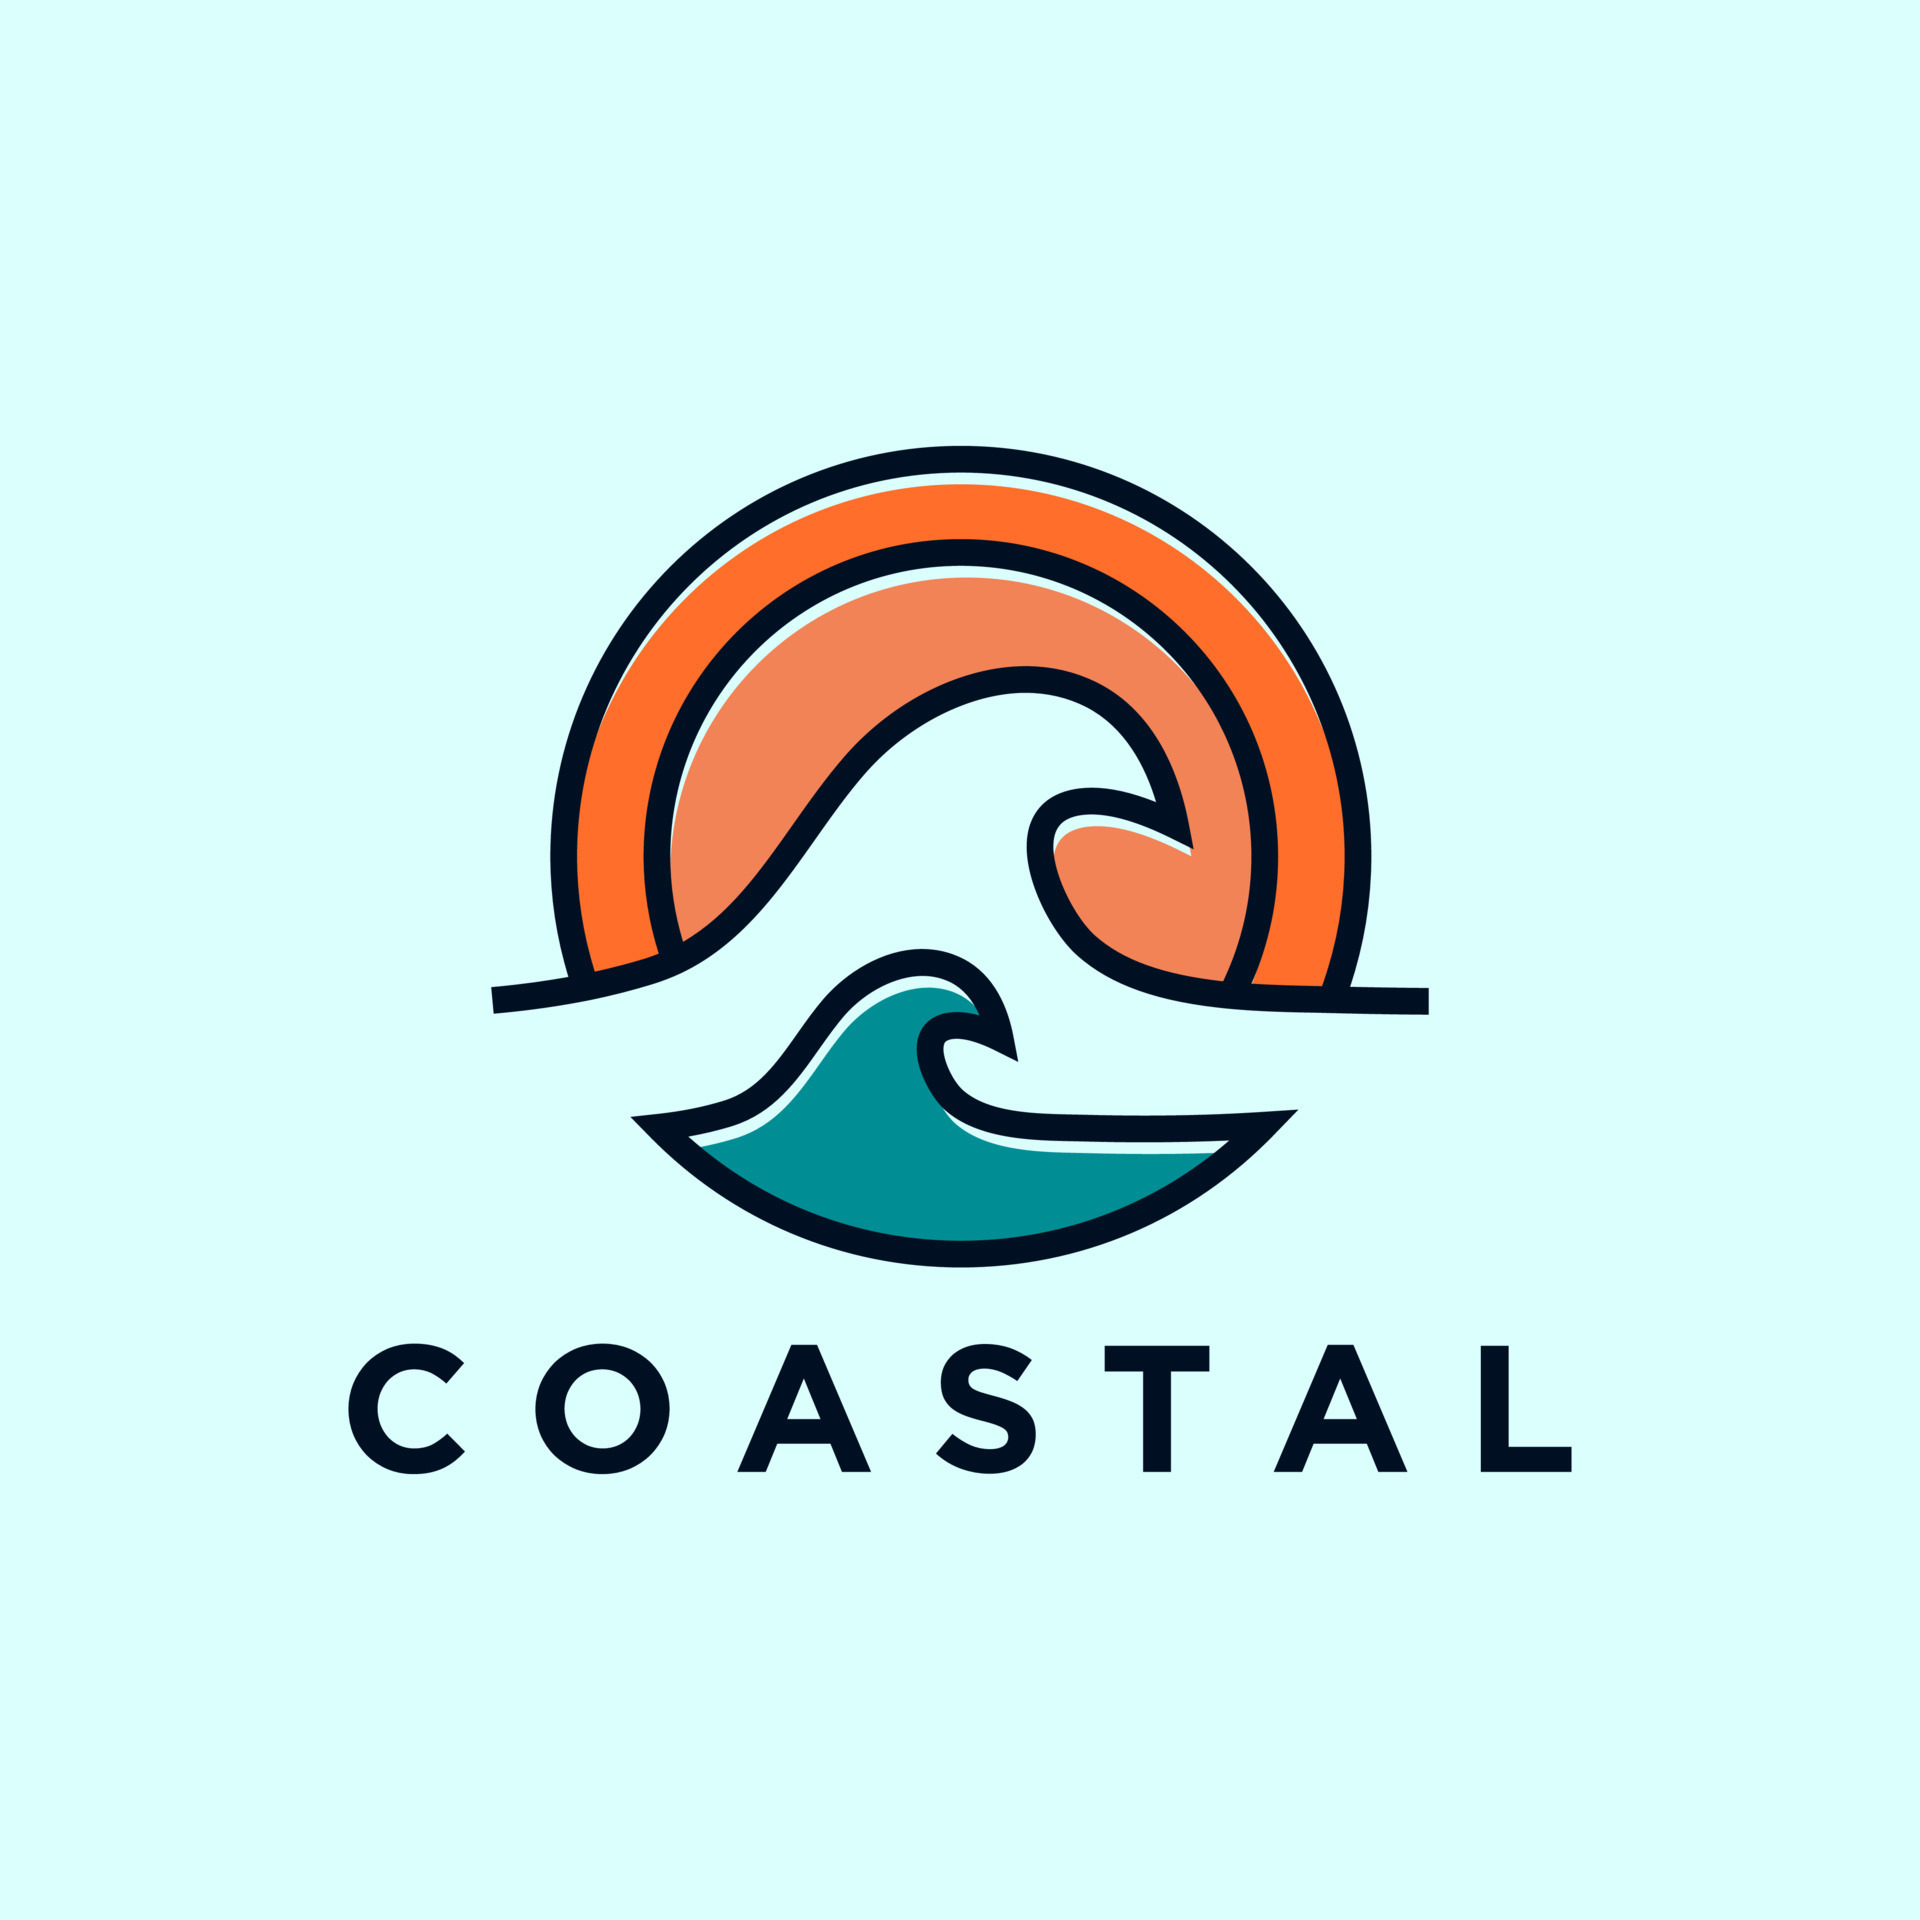 coastal logo ideas 1